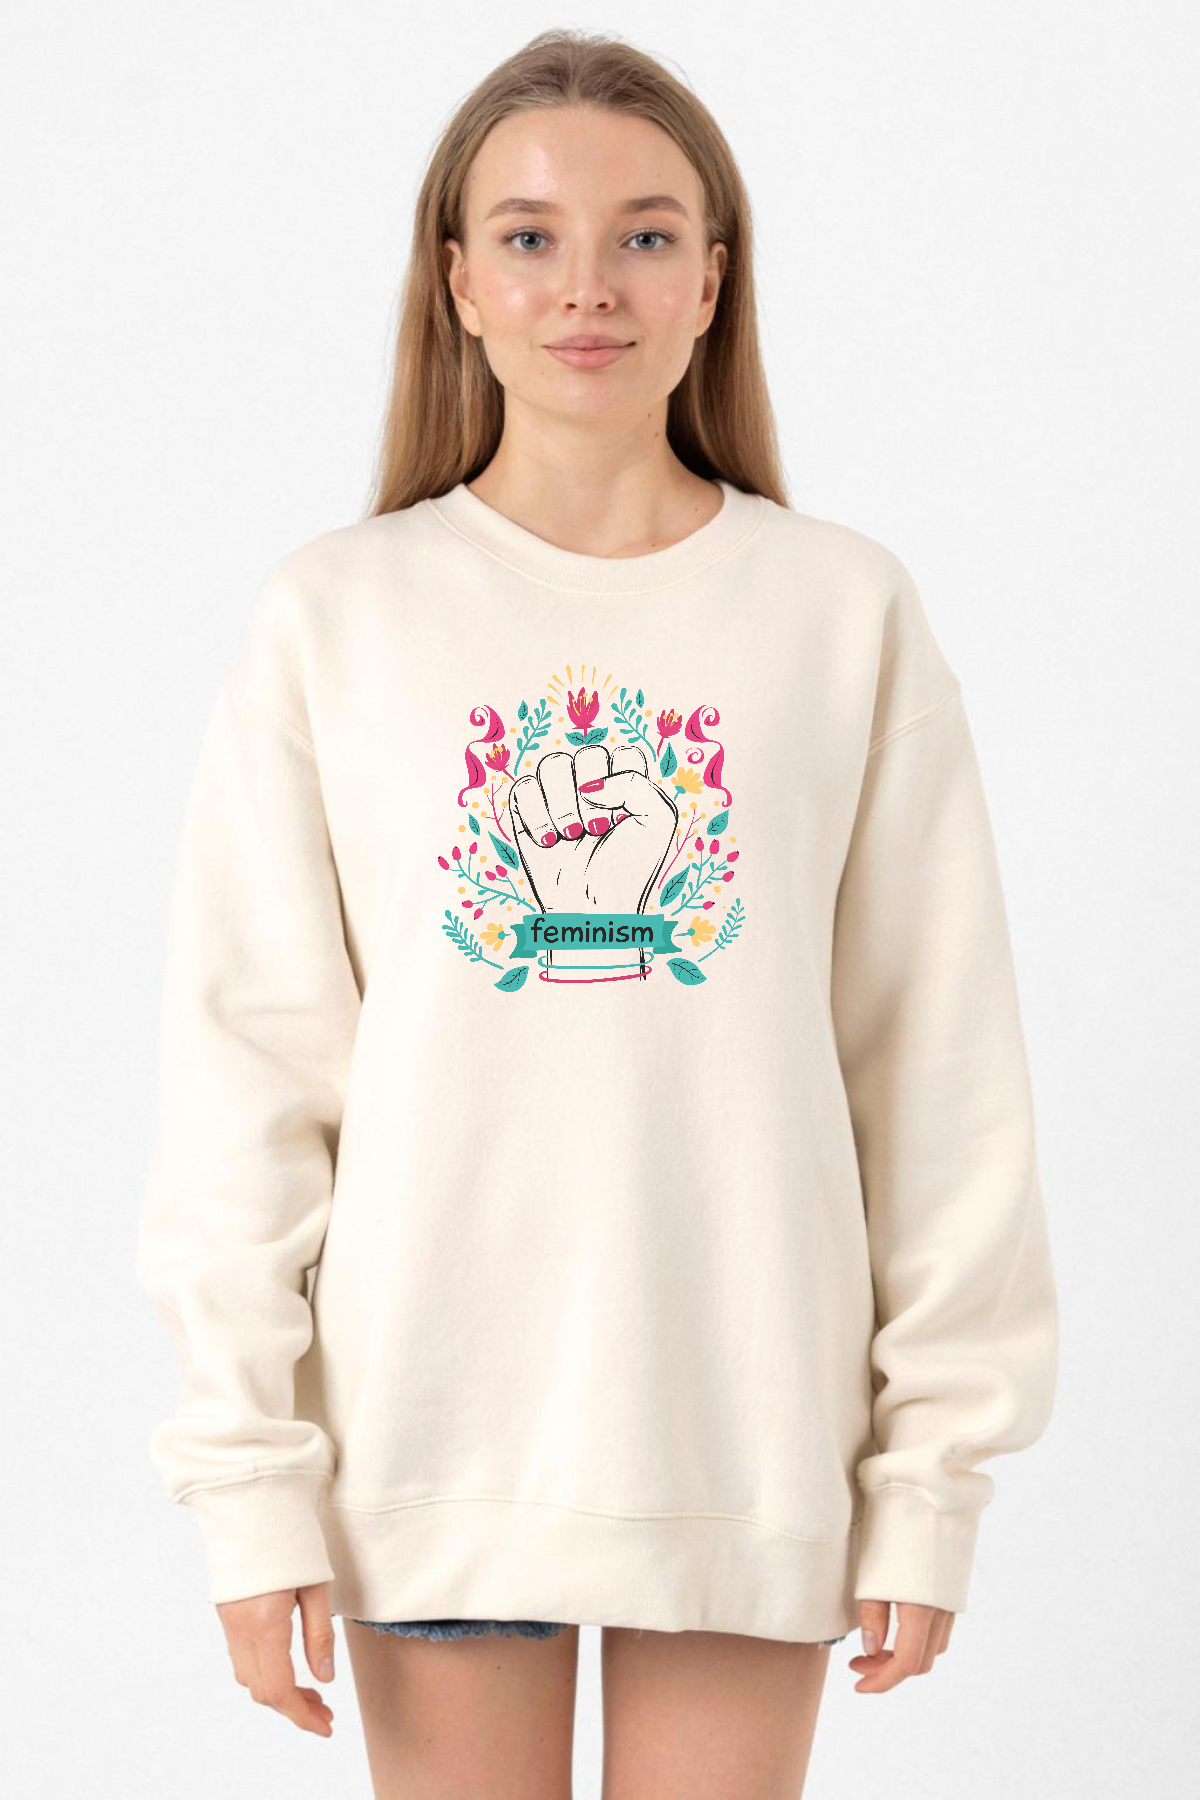 Flowered Feminism Hand Ekru Kadın 2ip Sweatshirt